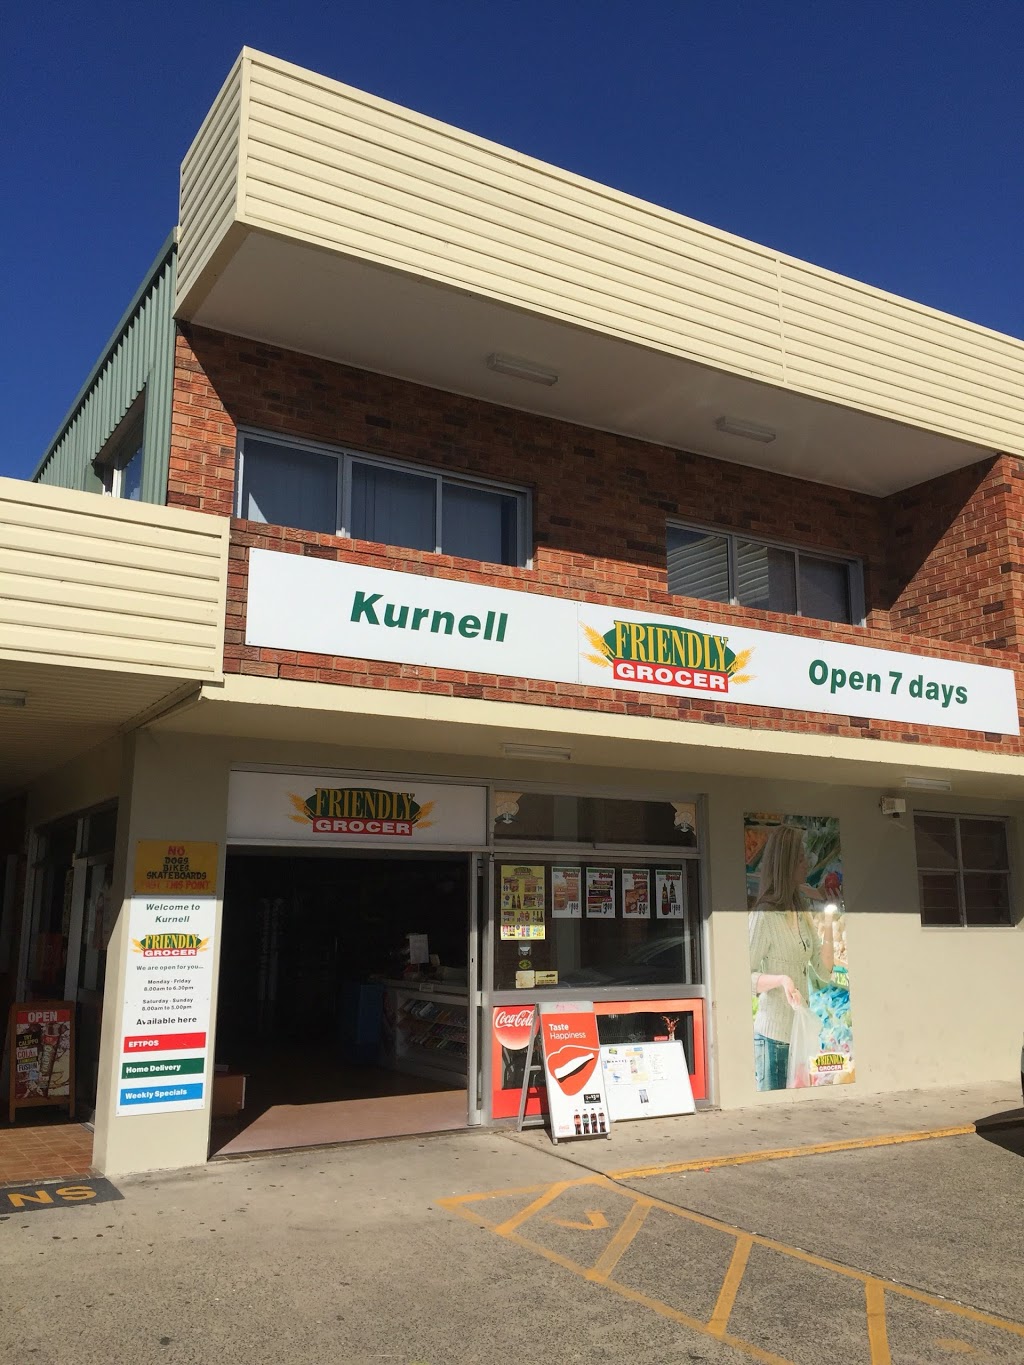 Friendly/Grocer 4SQ KURNELL | supermarket | 10-20 Torres St, Kurnell NSW 2231, Australia | 0296689453 OR +61 2 9668 9453